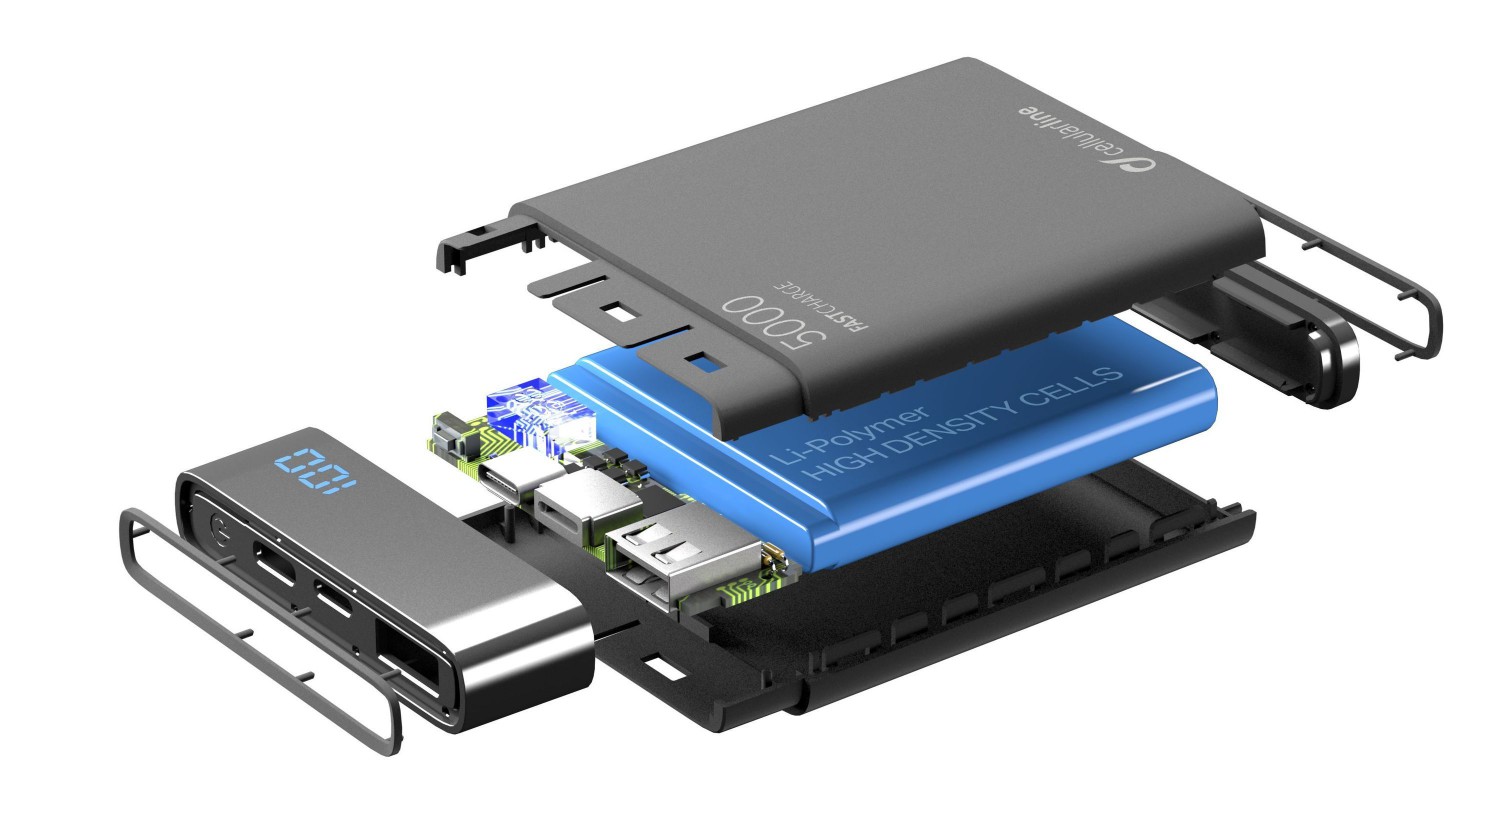 Powerbanka Cellularline FreePower Manta HD, 5000 mAh, Lightning+USB-C, černá